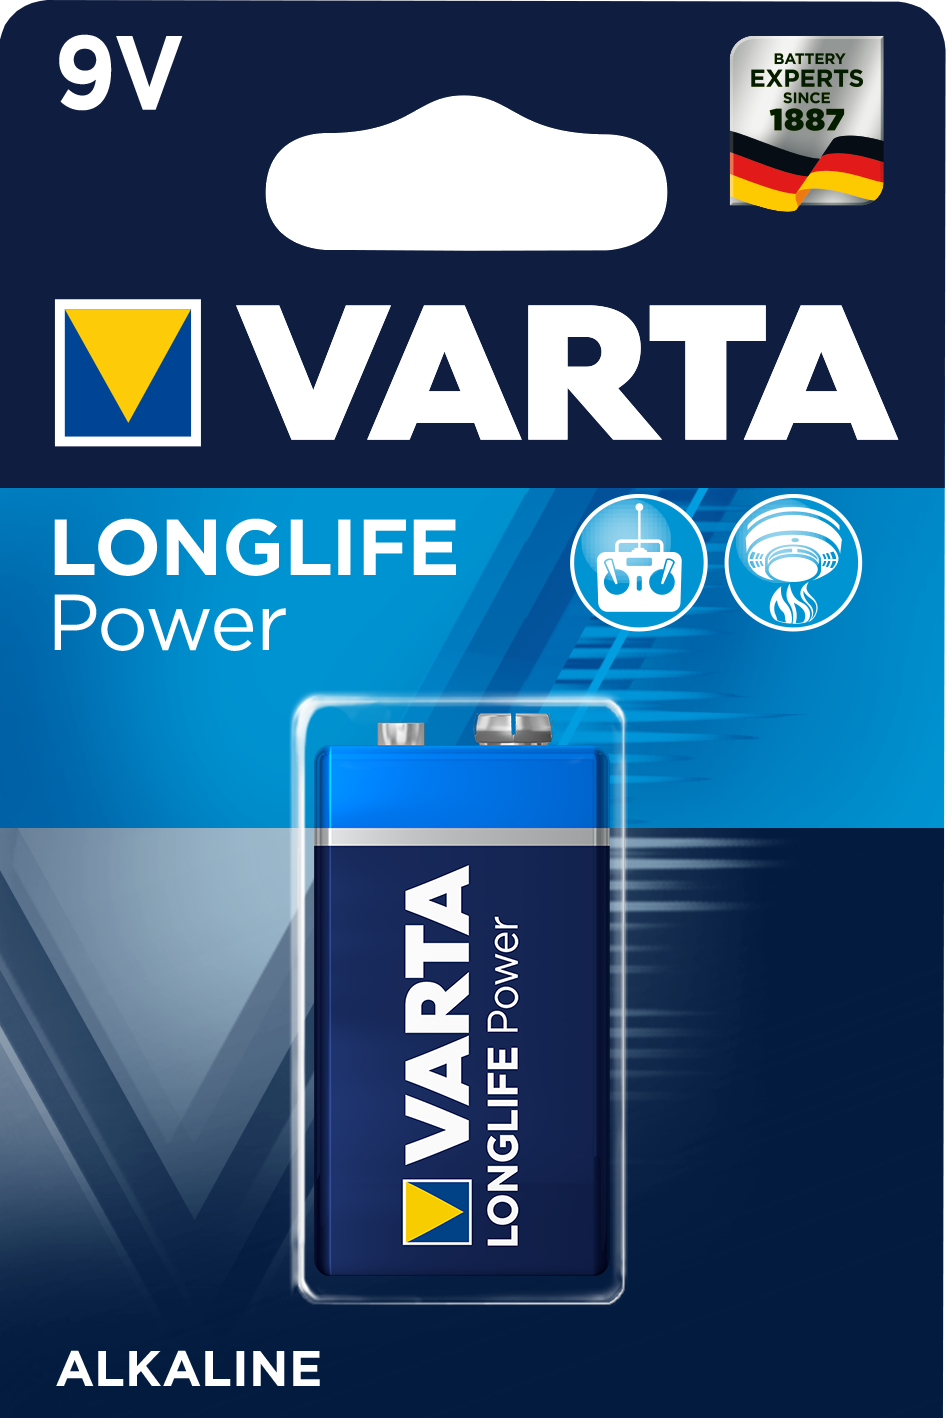 Longlife Power Batterie von Varta.